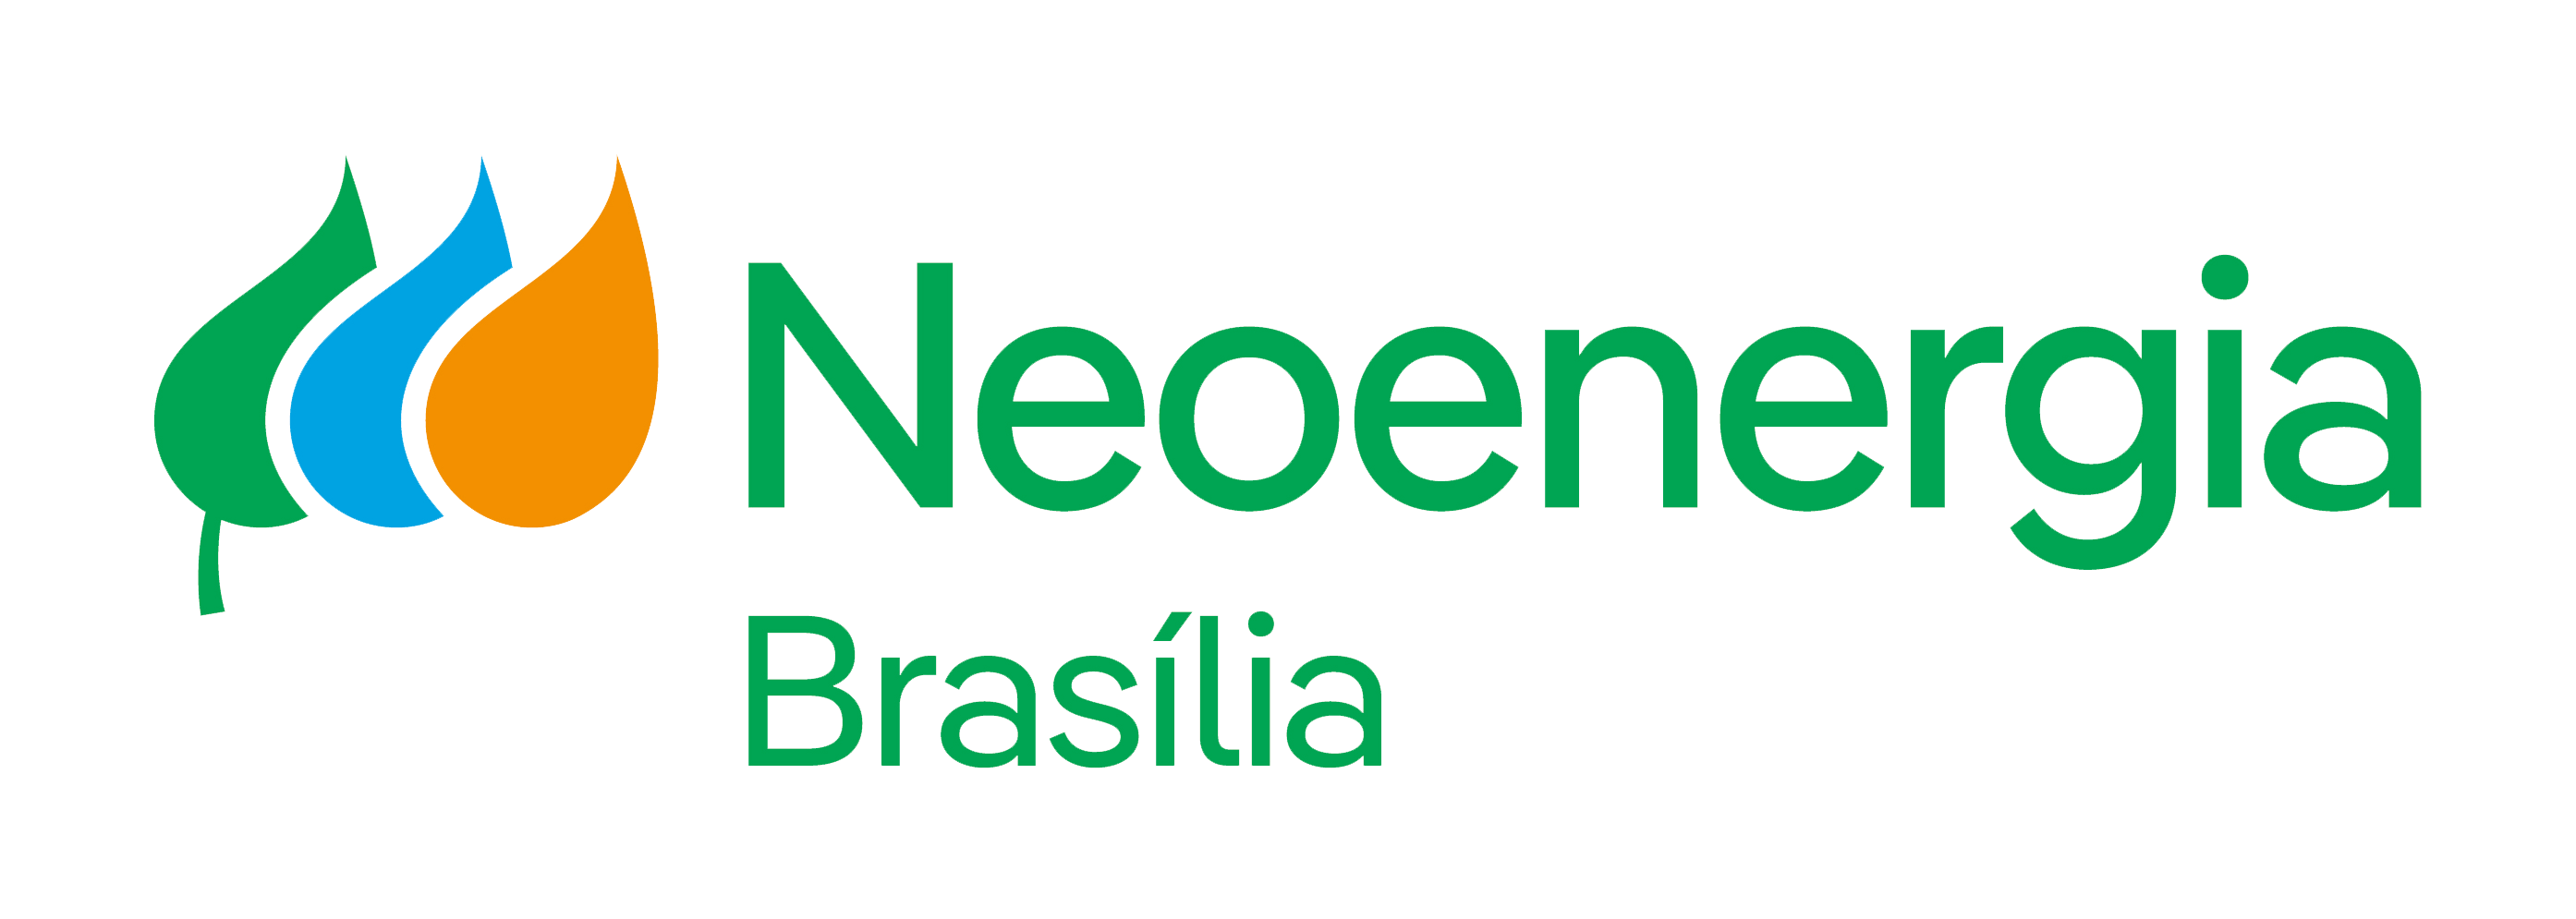 IBERDROLA NEOENERGIA BRASILIA